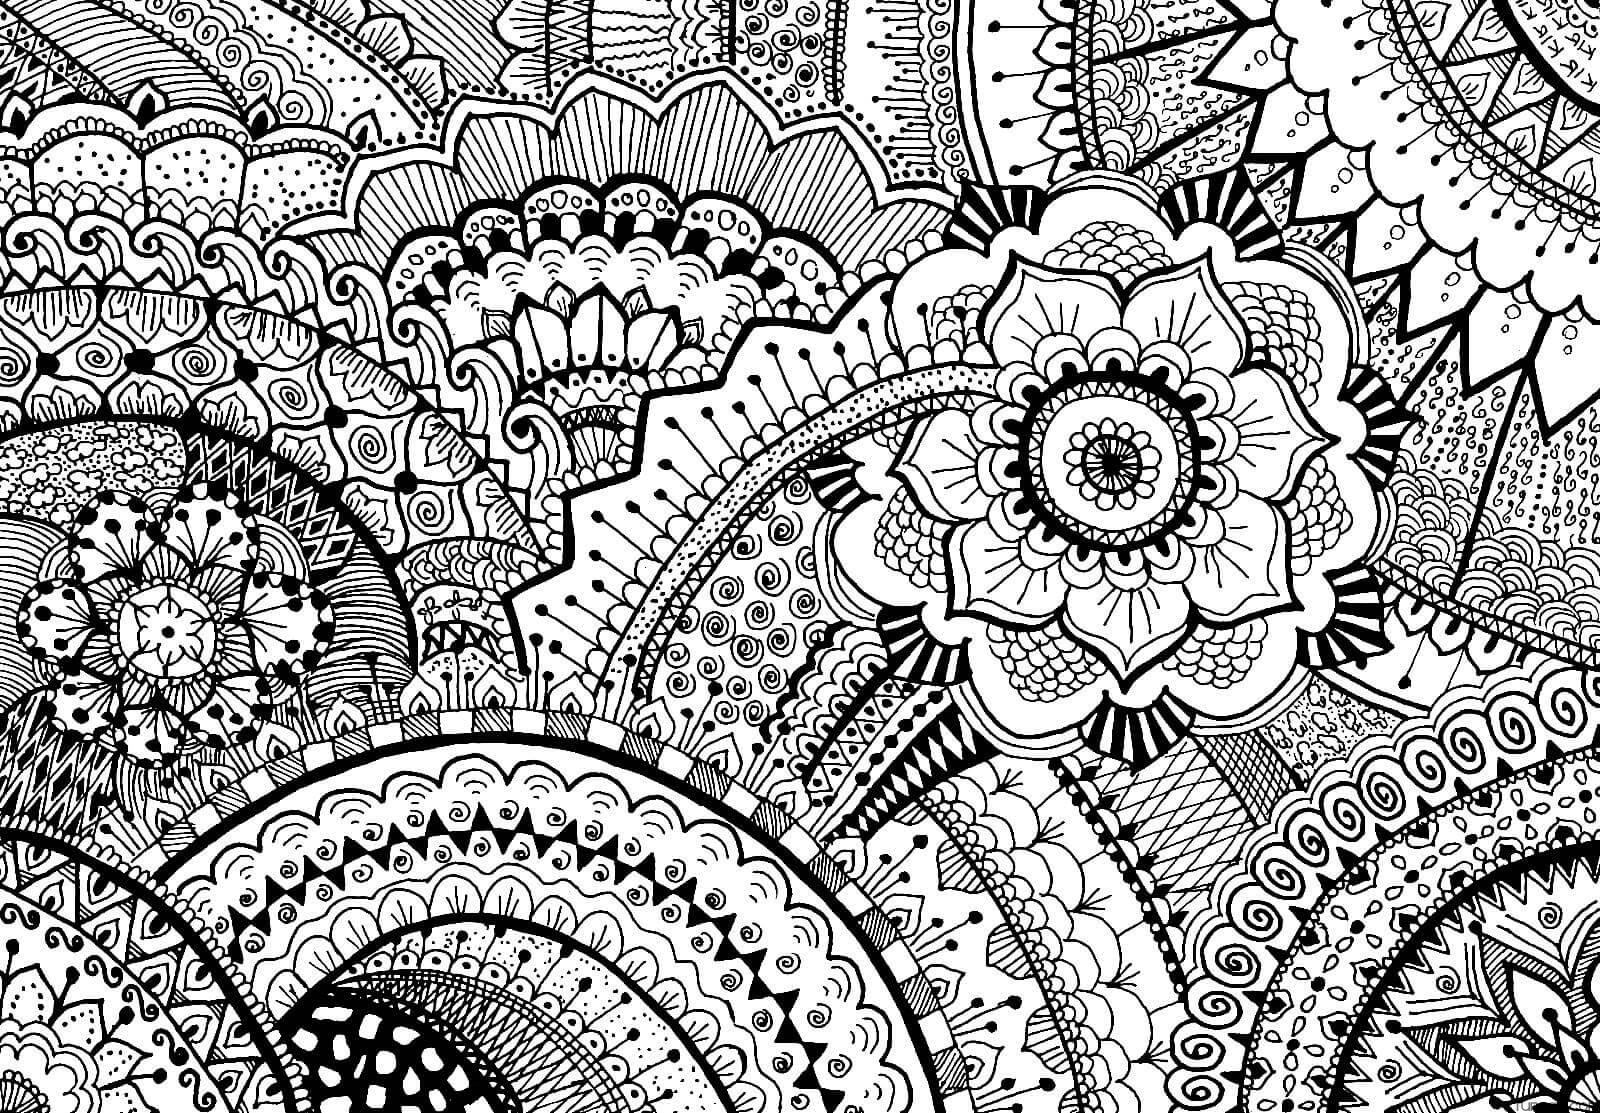 Dark Jellyfish Drawing Coloring Page » Turkau